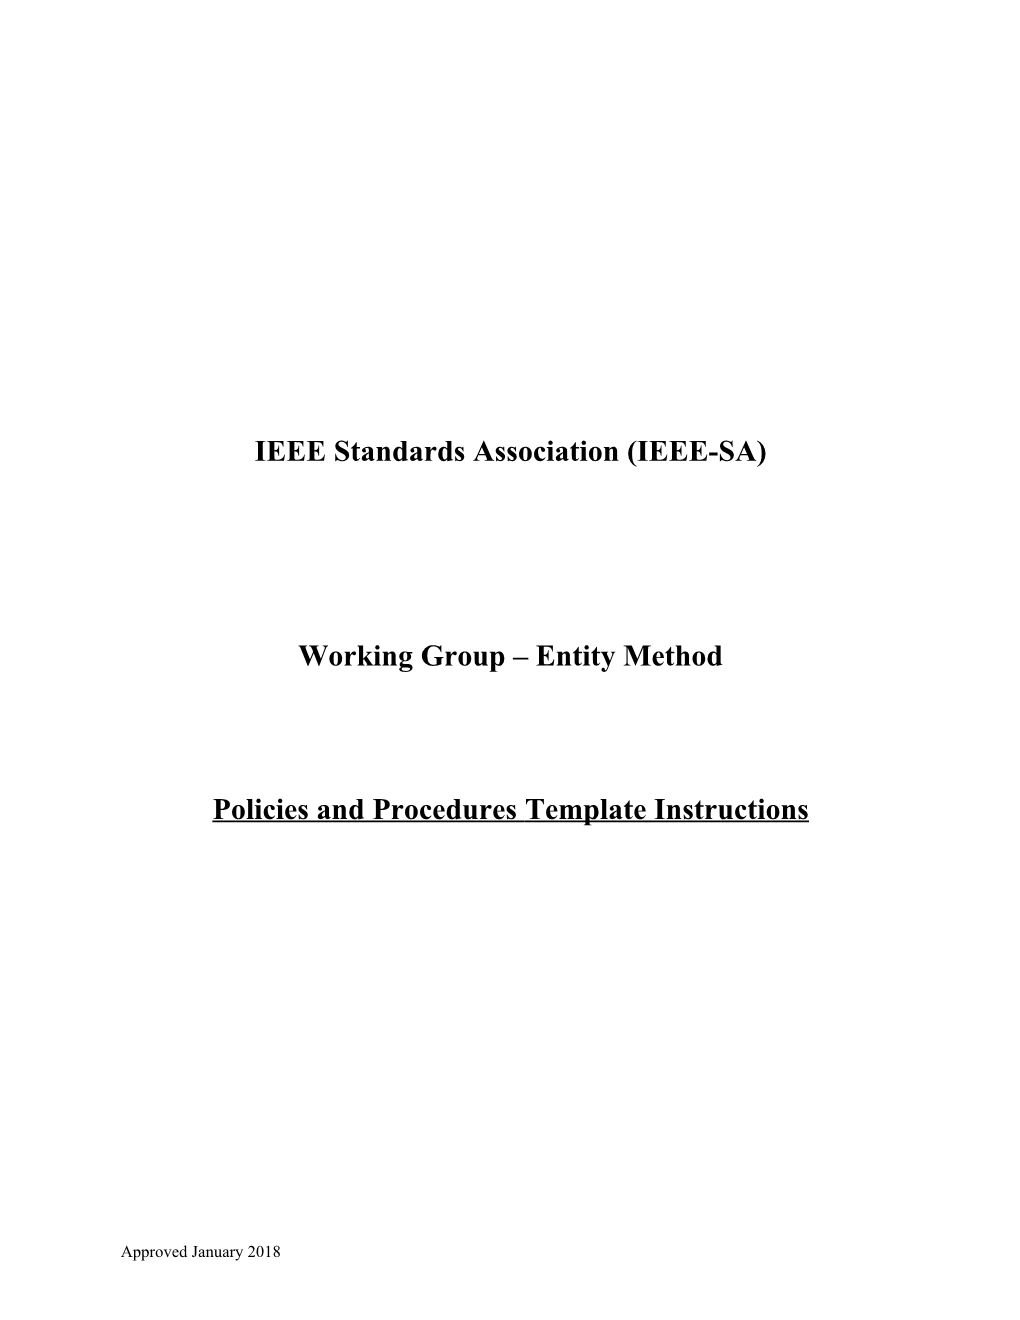 IEEE Standards Association (IEEE-SA) Baseline Policies and Procedures for IEEE Standards